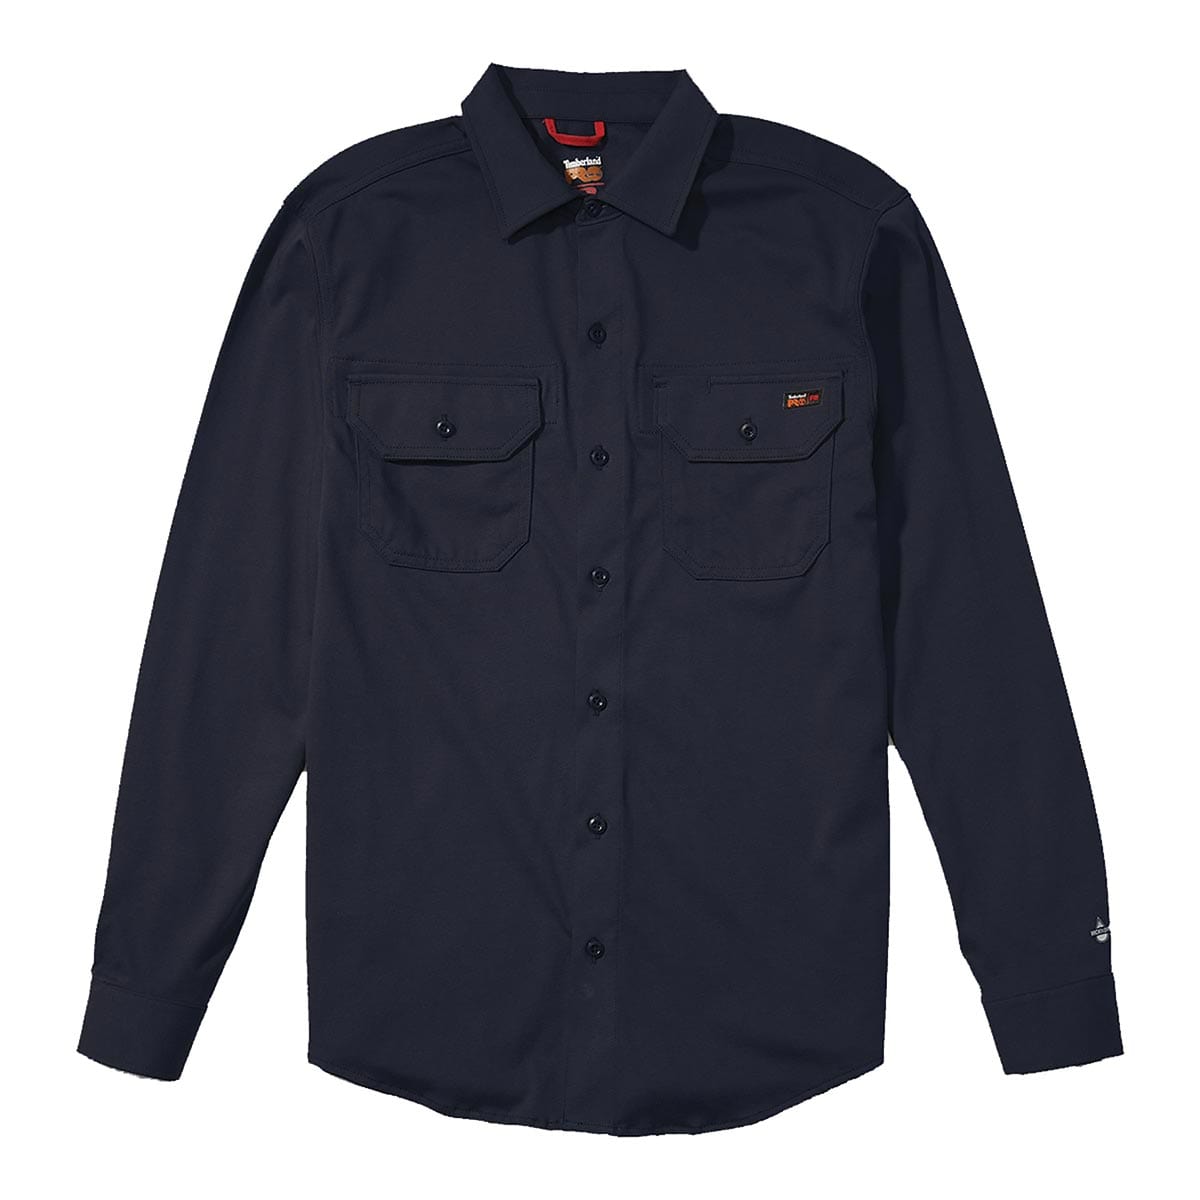 Timberland PRO FR Cotton Core Button Front Shirt